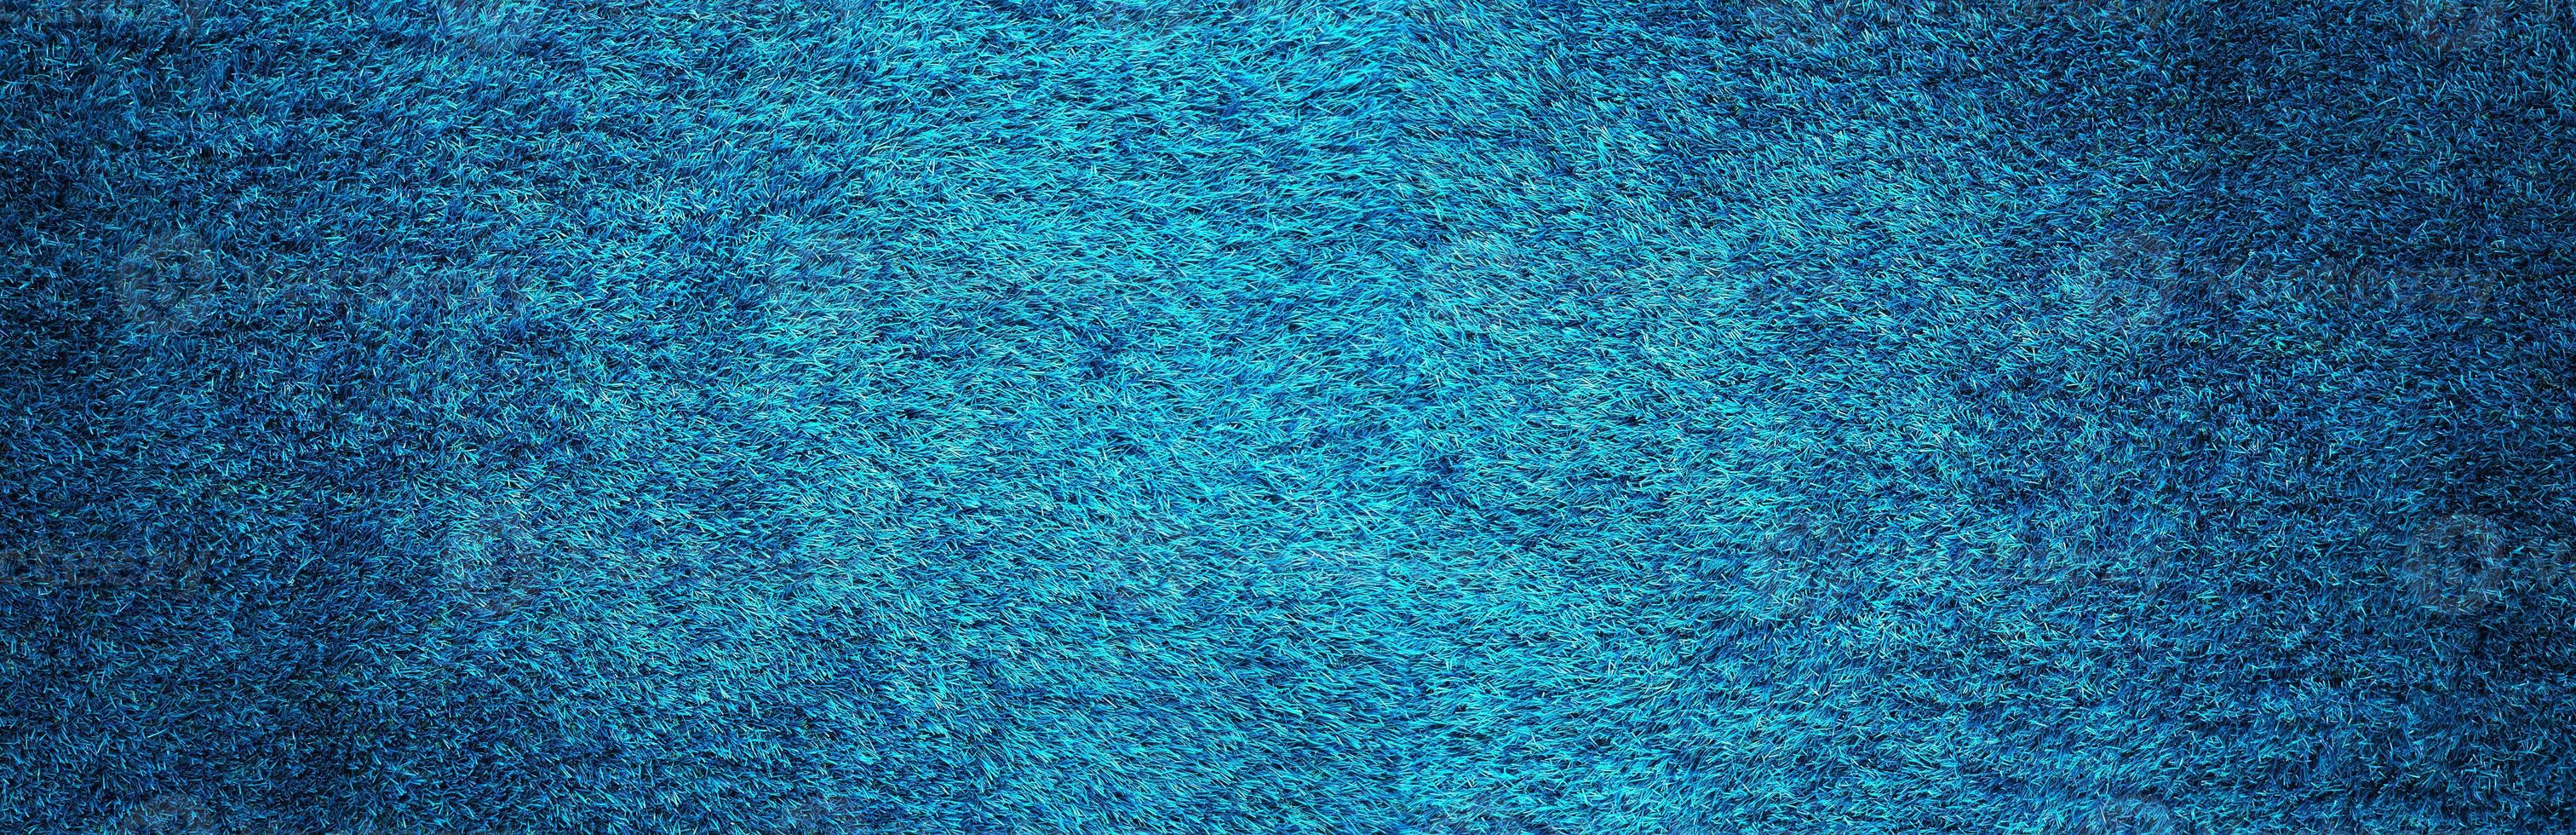 le fond de texture de motif de gazon bleu artificiel photo